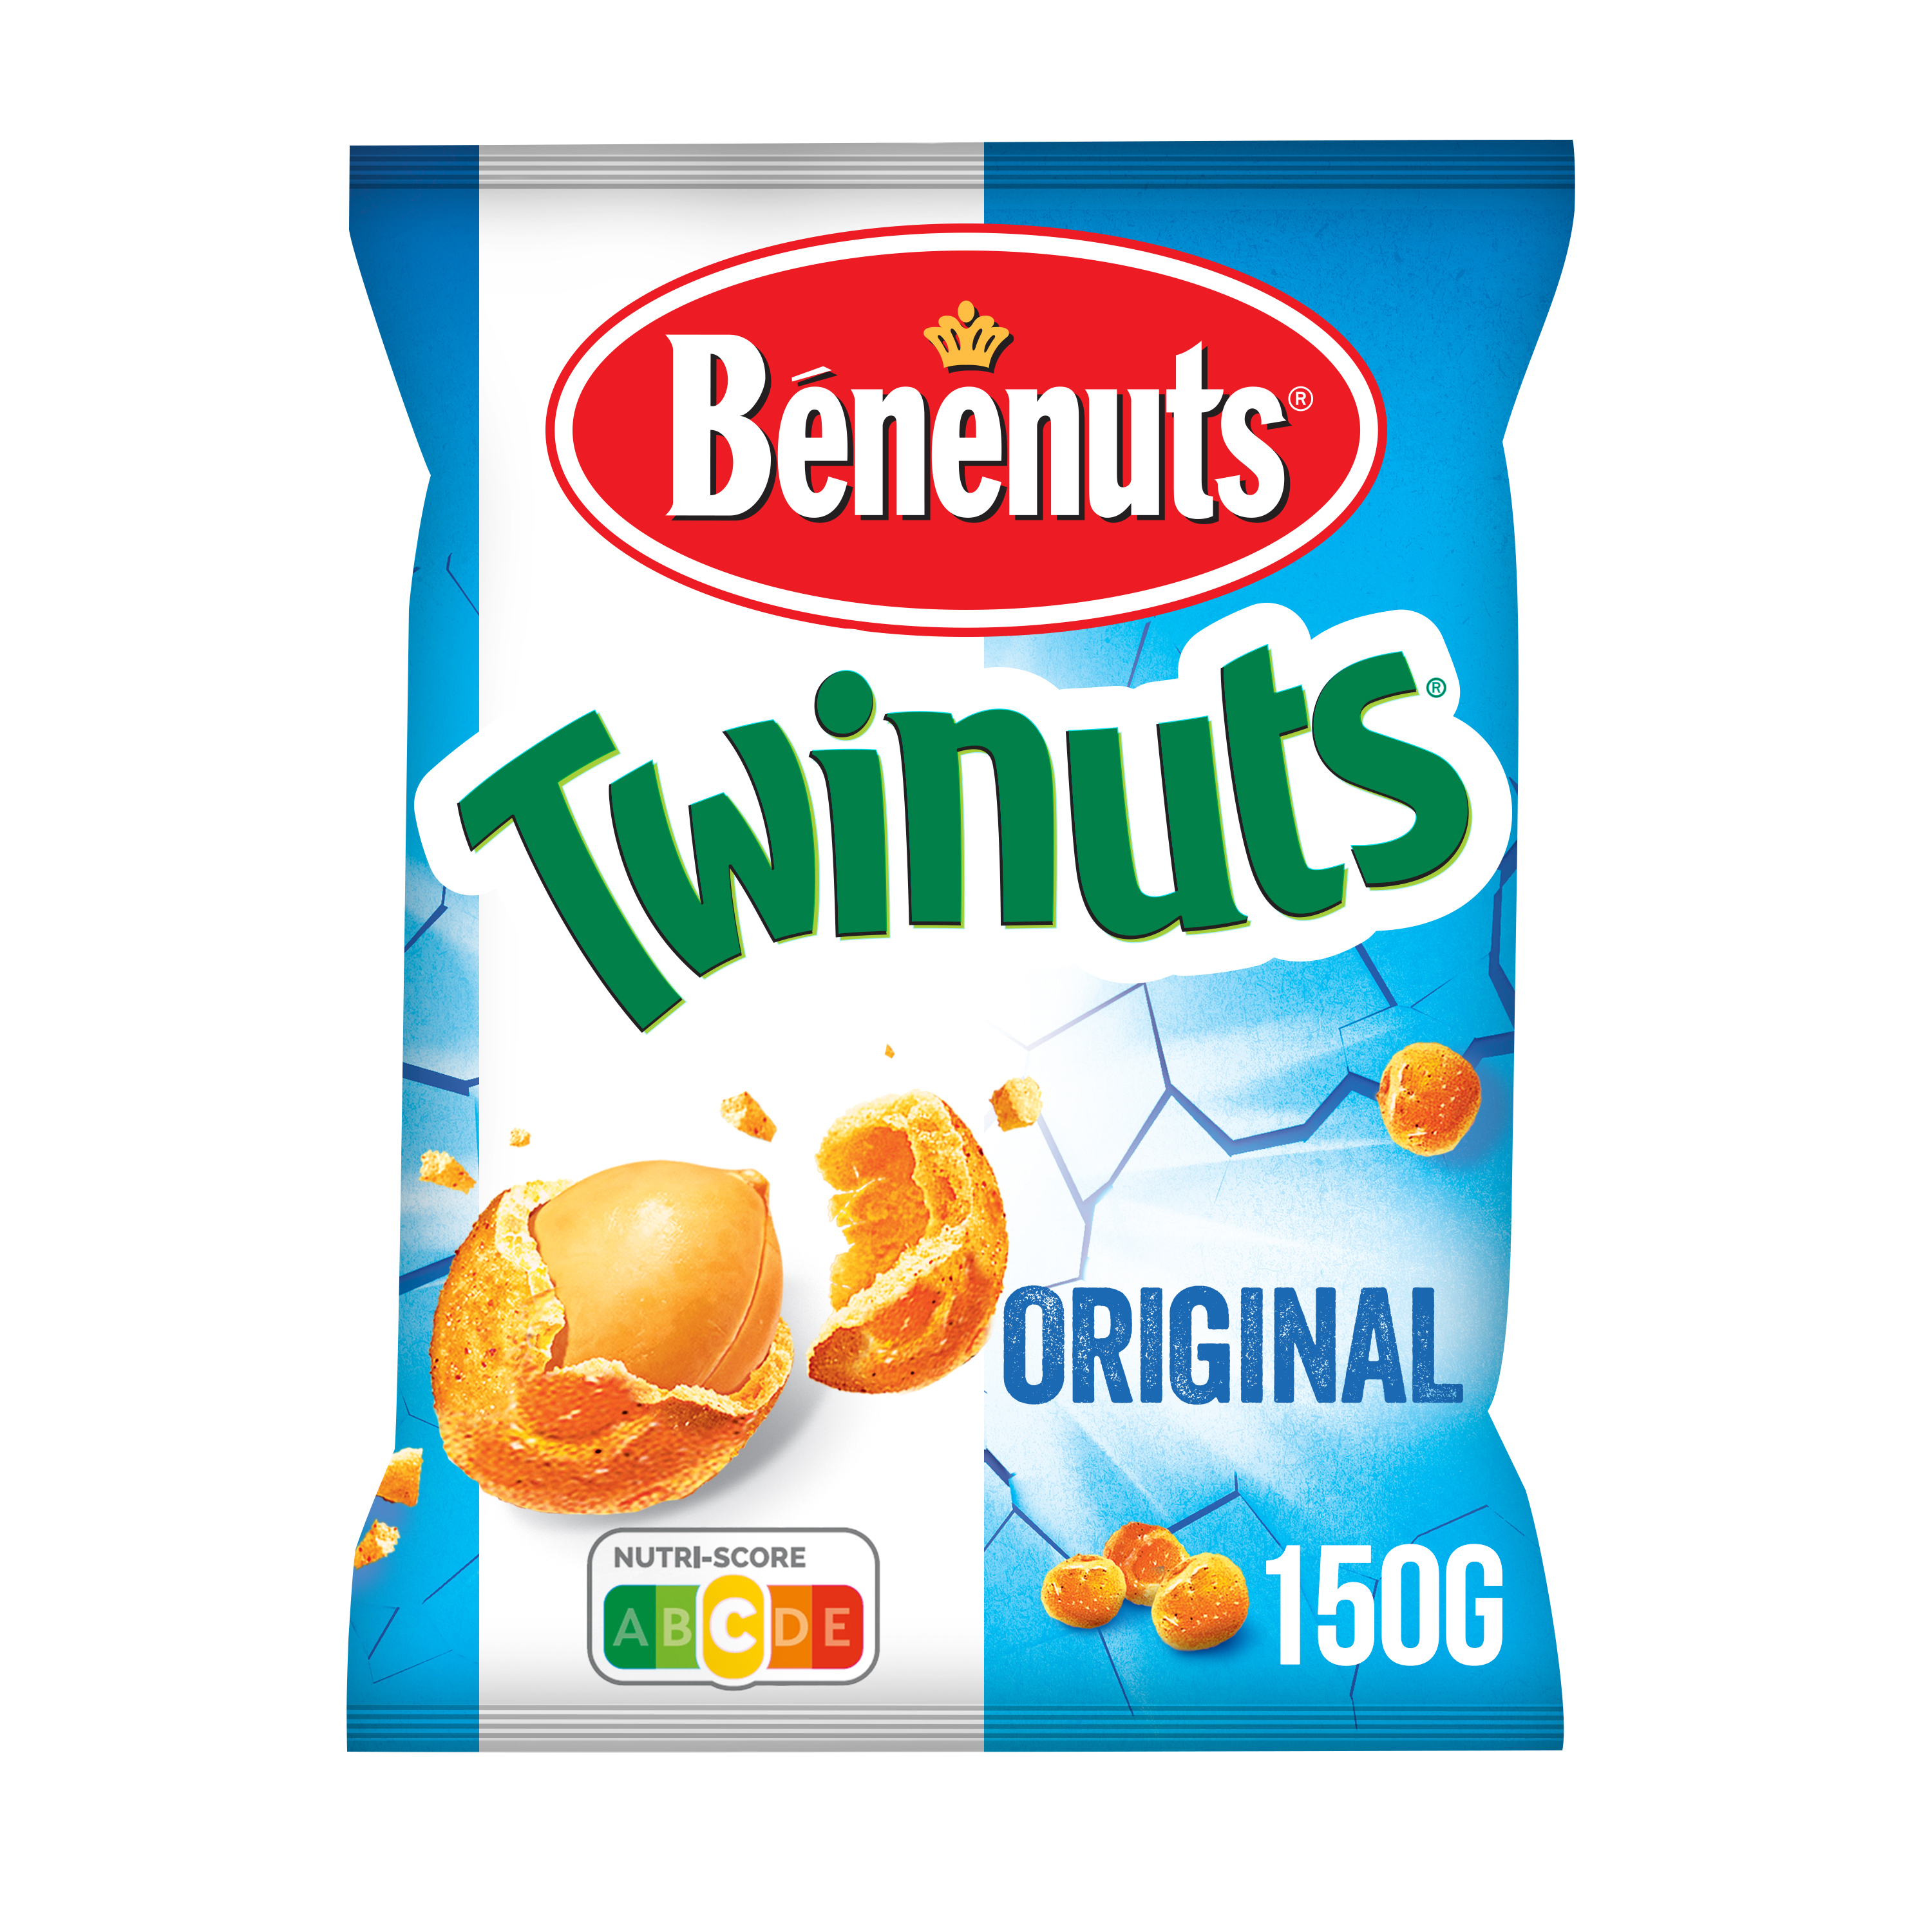 Twinuts goût salé 150 g BENENUTS - Cdiscount Au quotidien